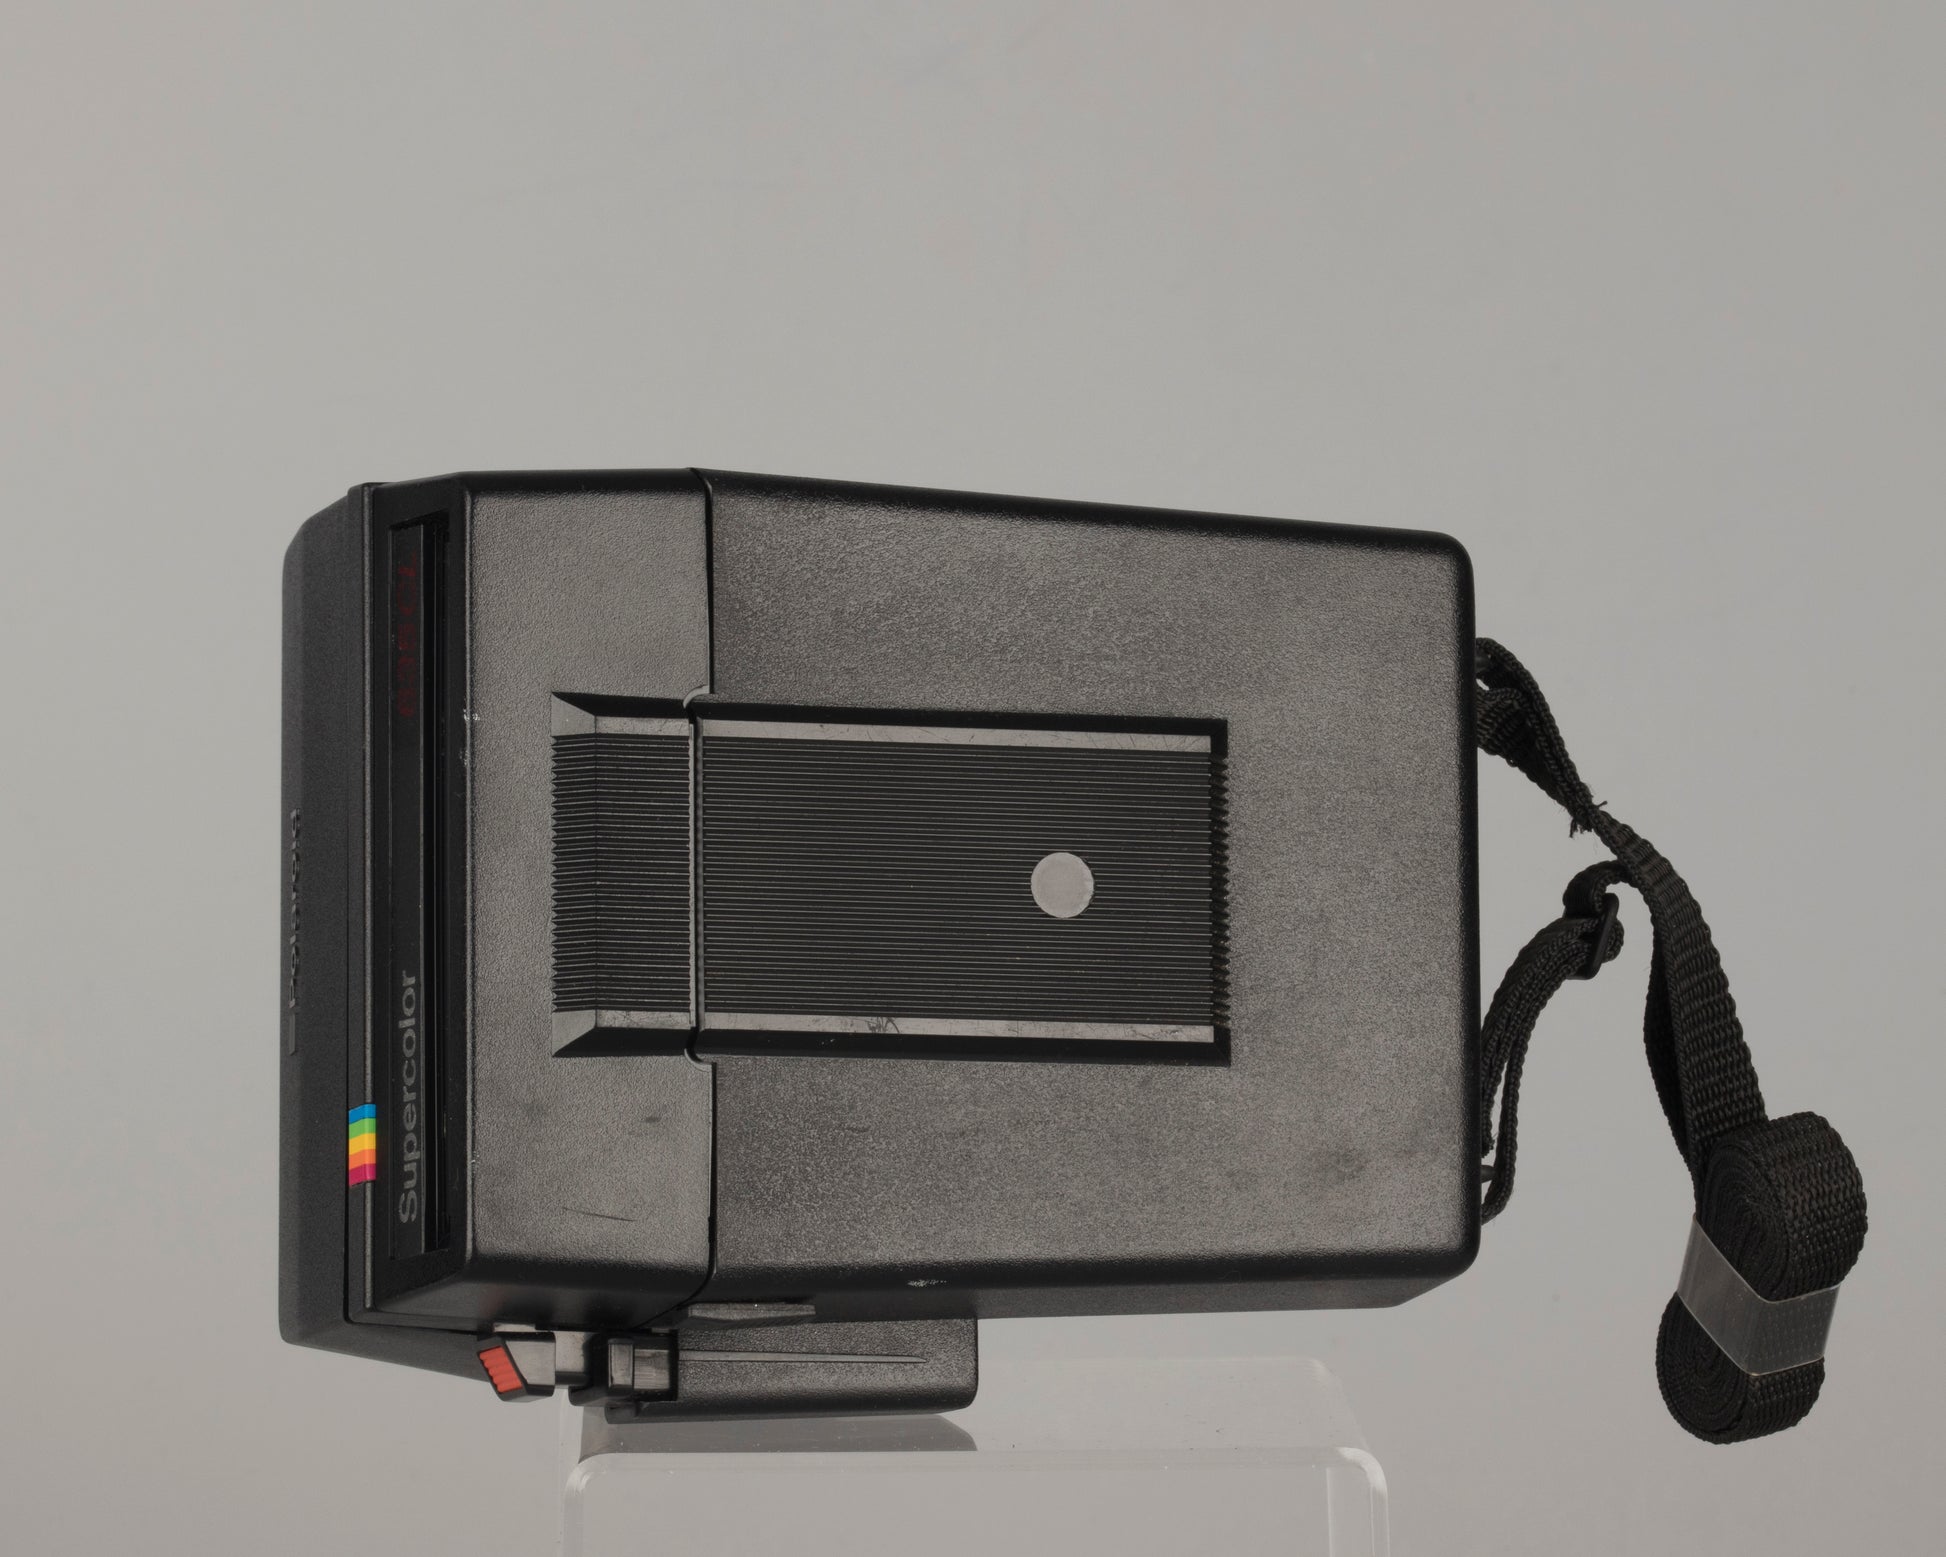 Polaroid Supercolor 635 CL – Retro Camera Shop